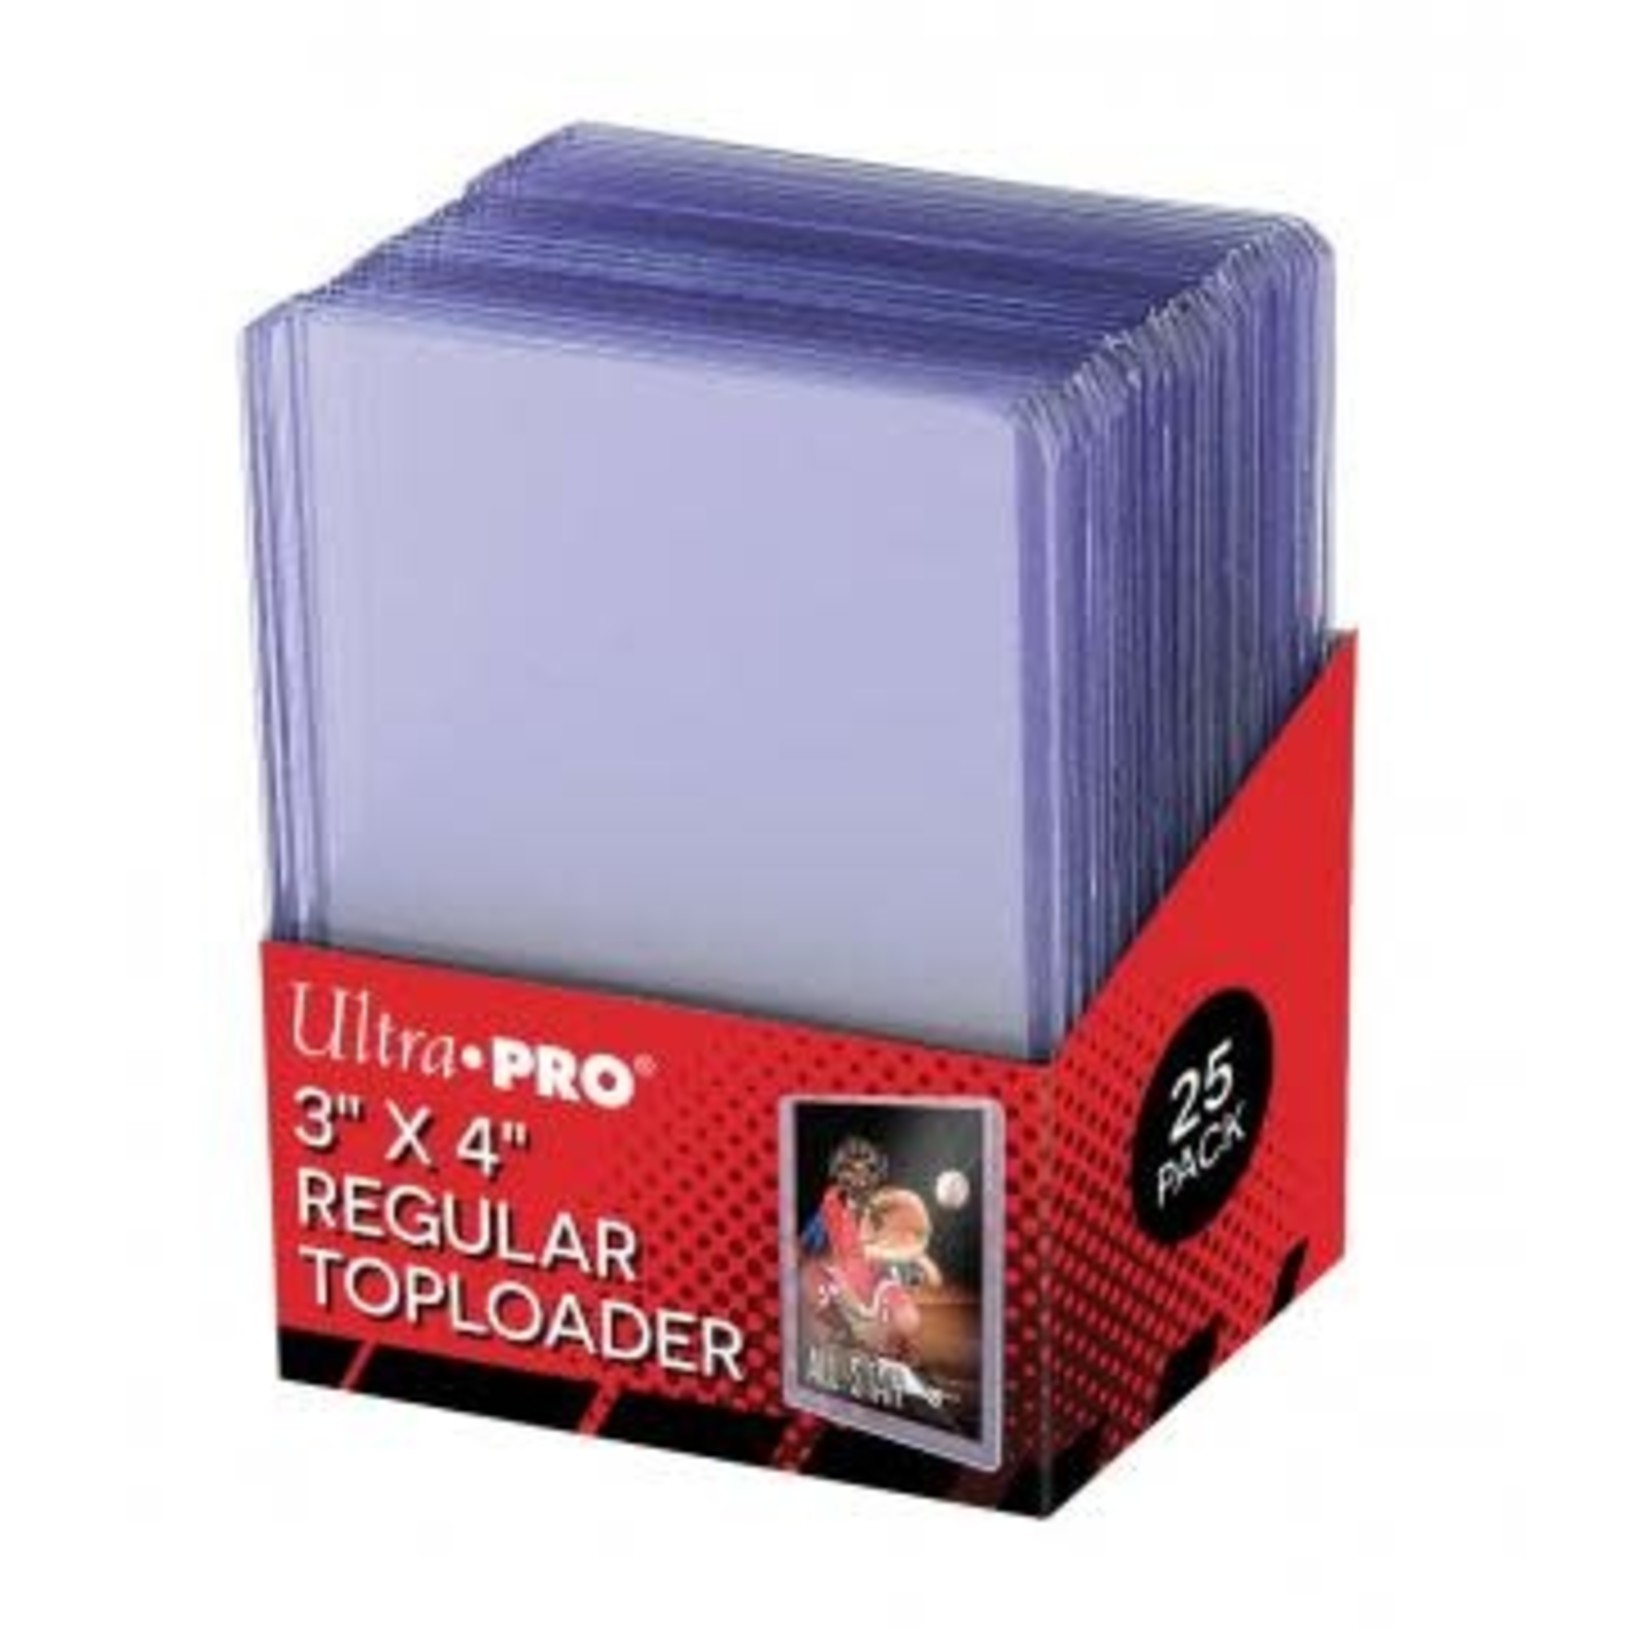 Ultra Pro Top Loader 3x4 (25 pack)